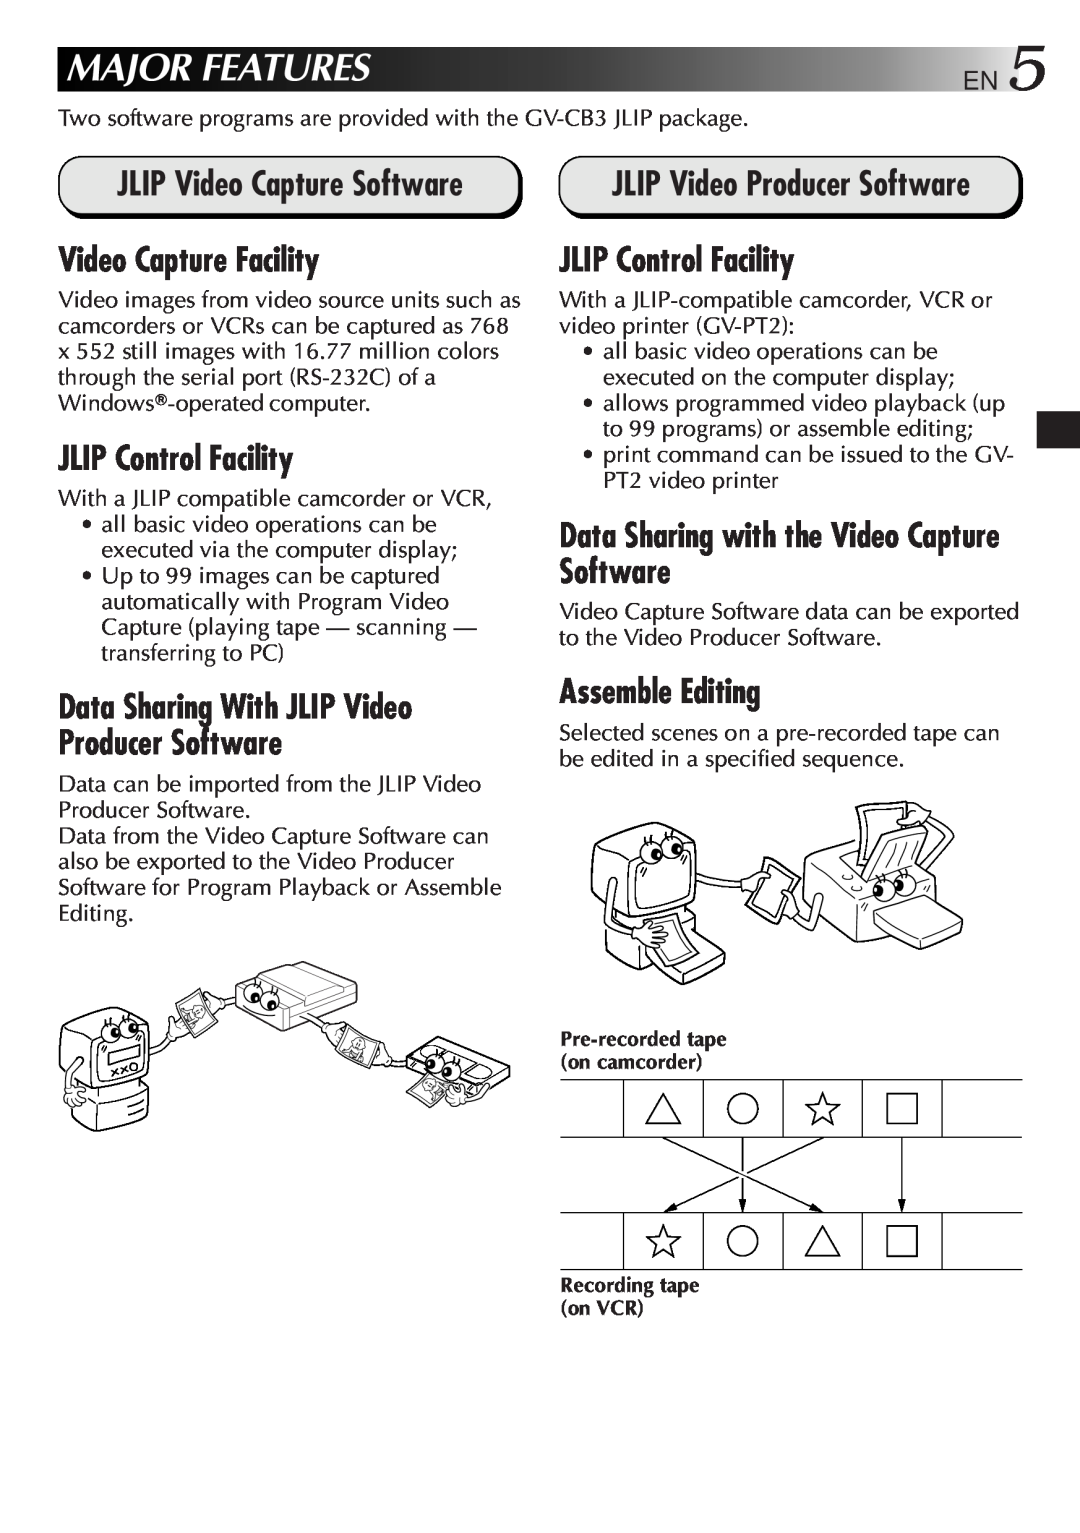 JVC GV-CB3E Major Features, JLIP Video Capture Software, Video Capture Facility, JLIP Control Facility, Assemble Editing 